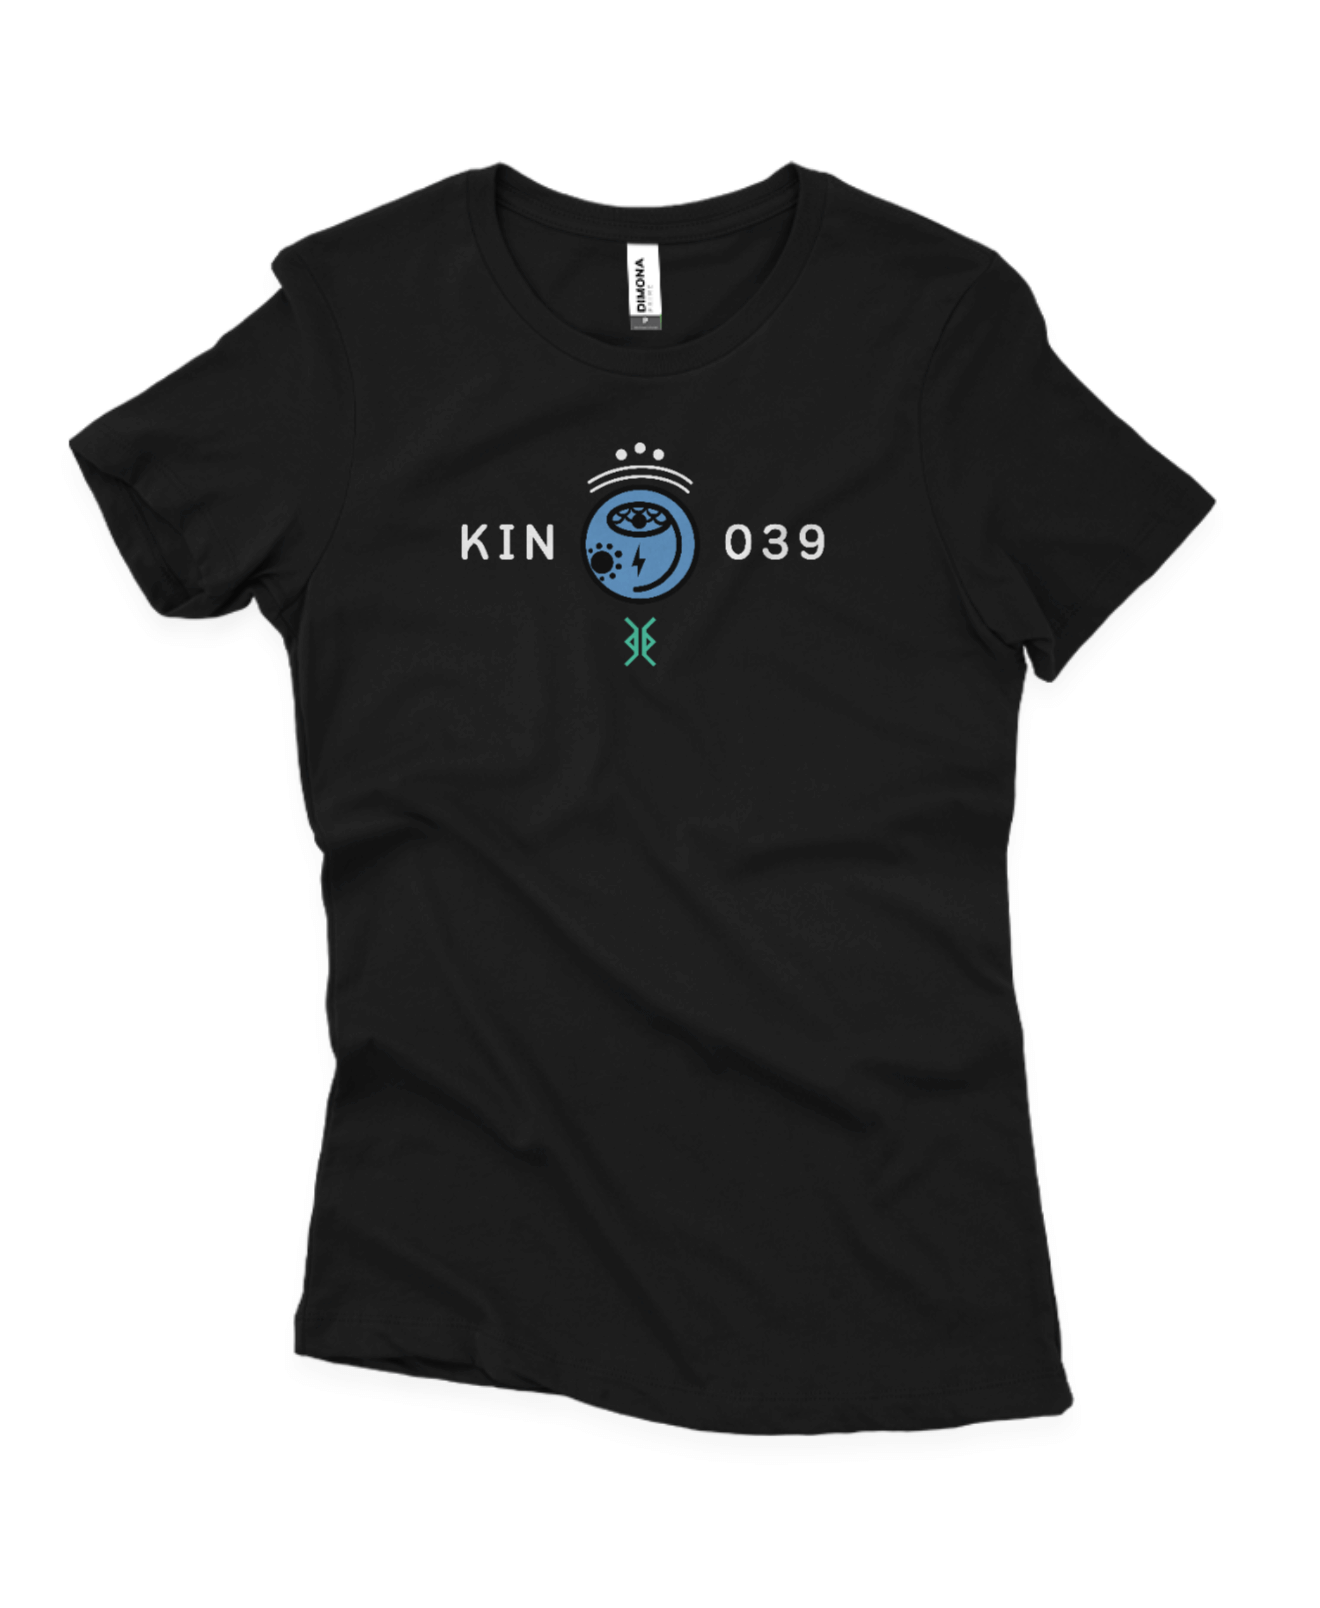 Mockup Camisa Preta - Camisa Feminina Kin 039 - Tormenta Cósmica Azul - Kin 39